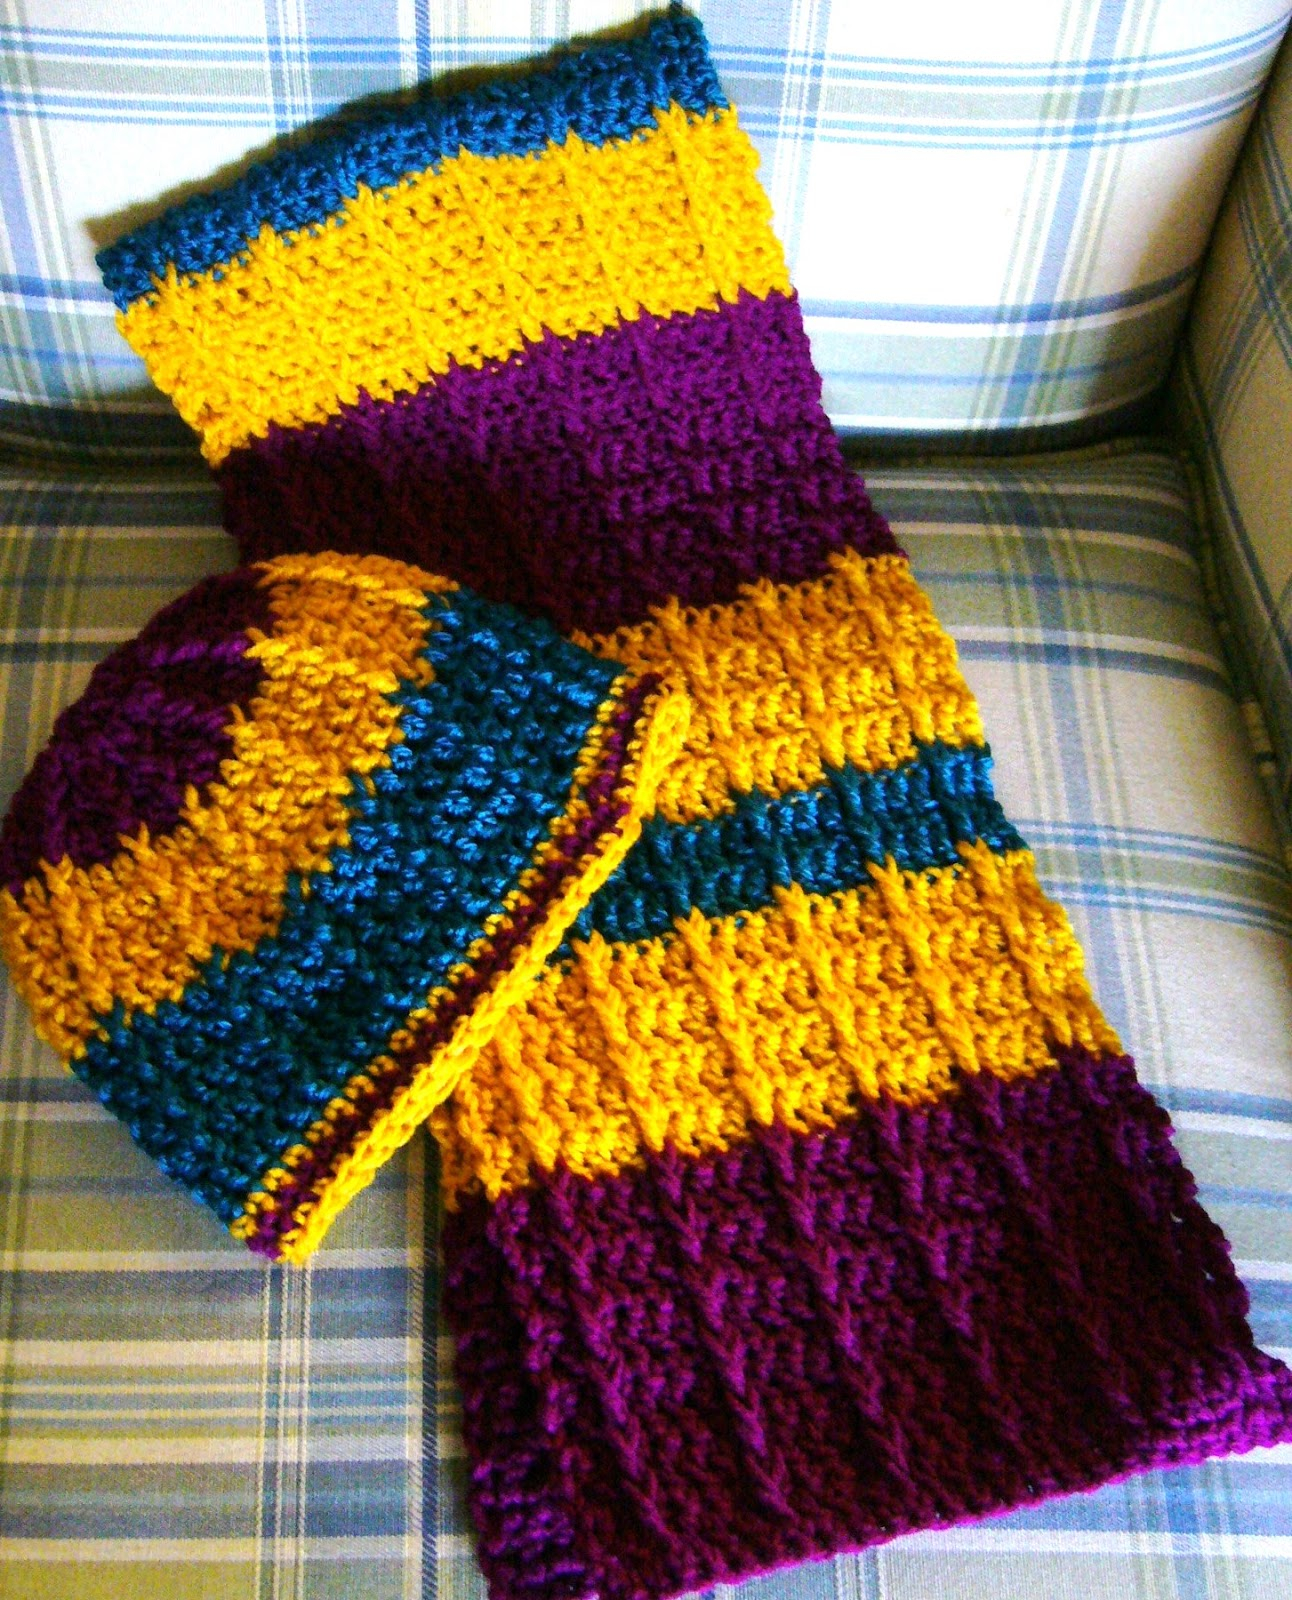 Double Crochet Scarf Patterns Simply Shoeboxes Double Crochet Front Post Crochet Scarf For Occ